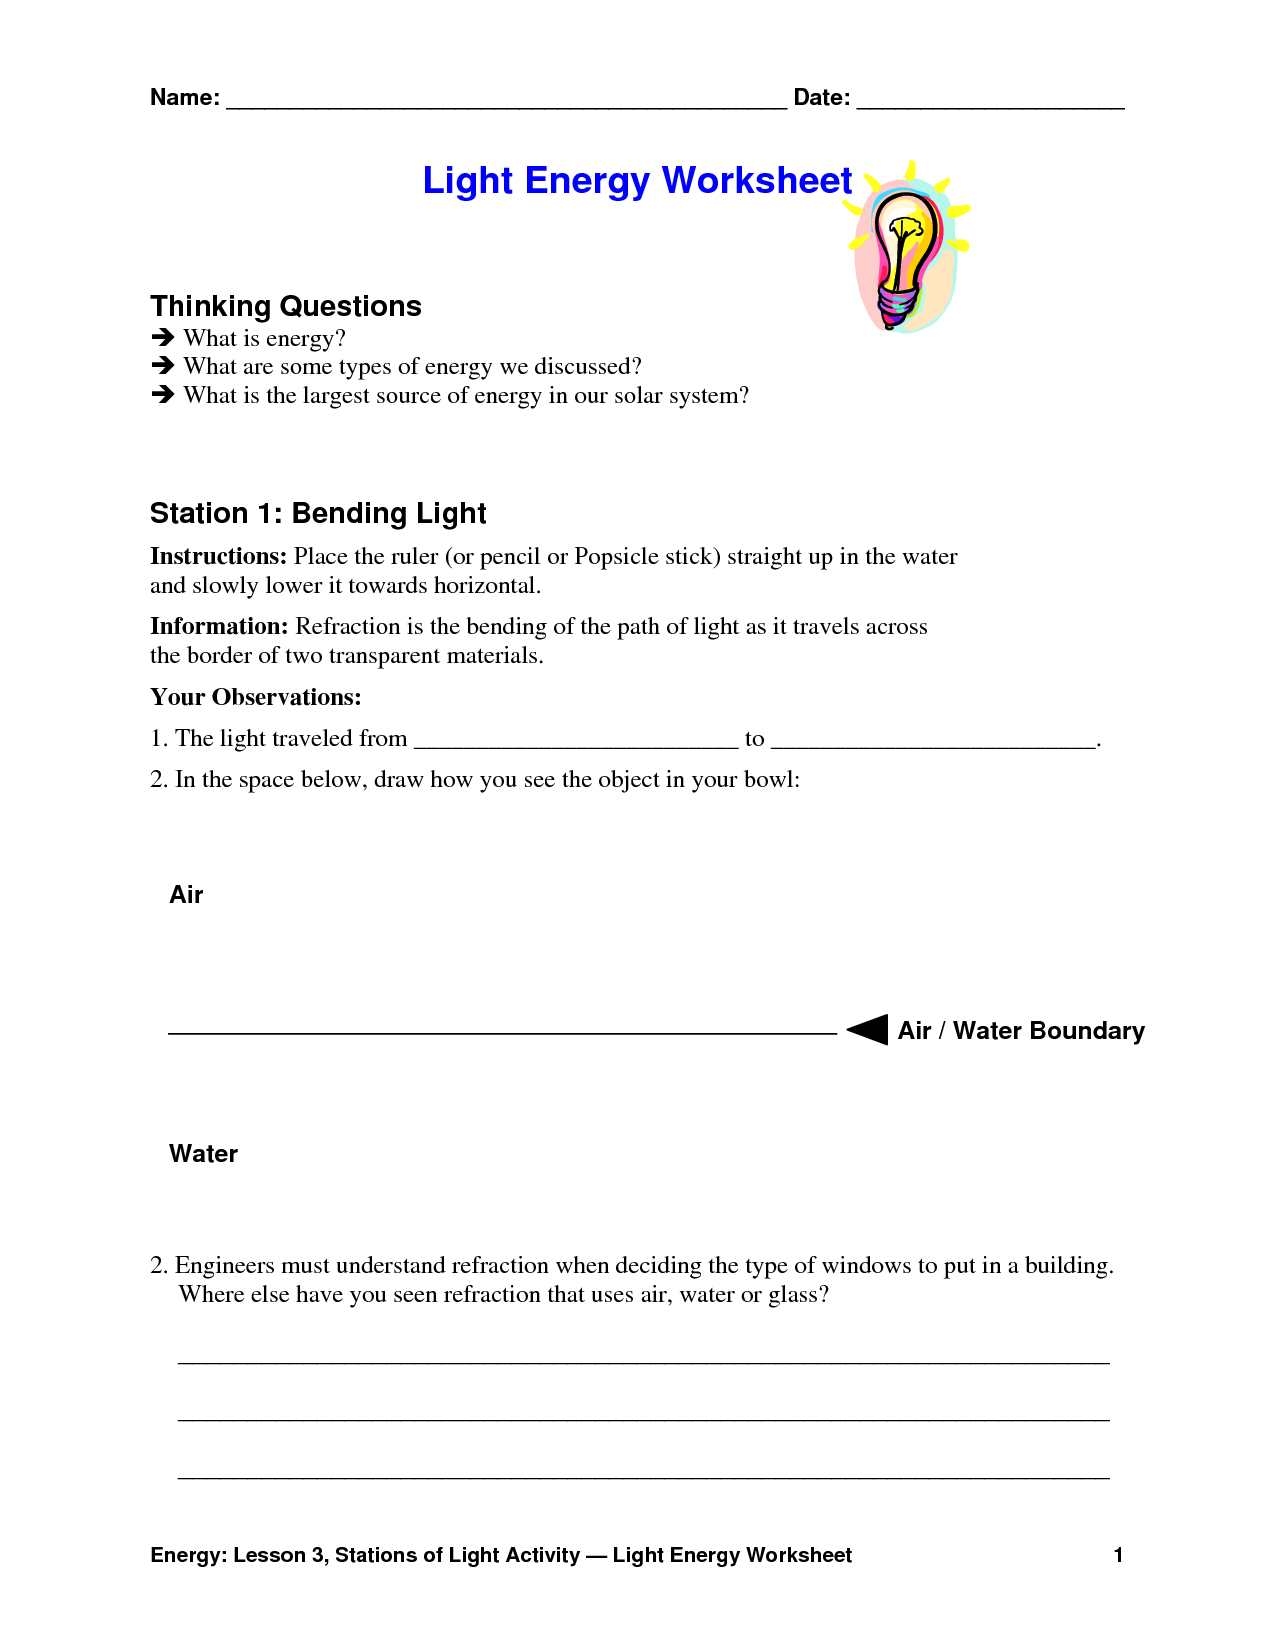 Light Energy Sources Worksheet Image